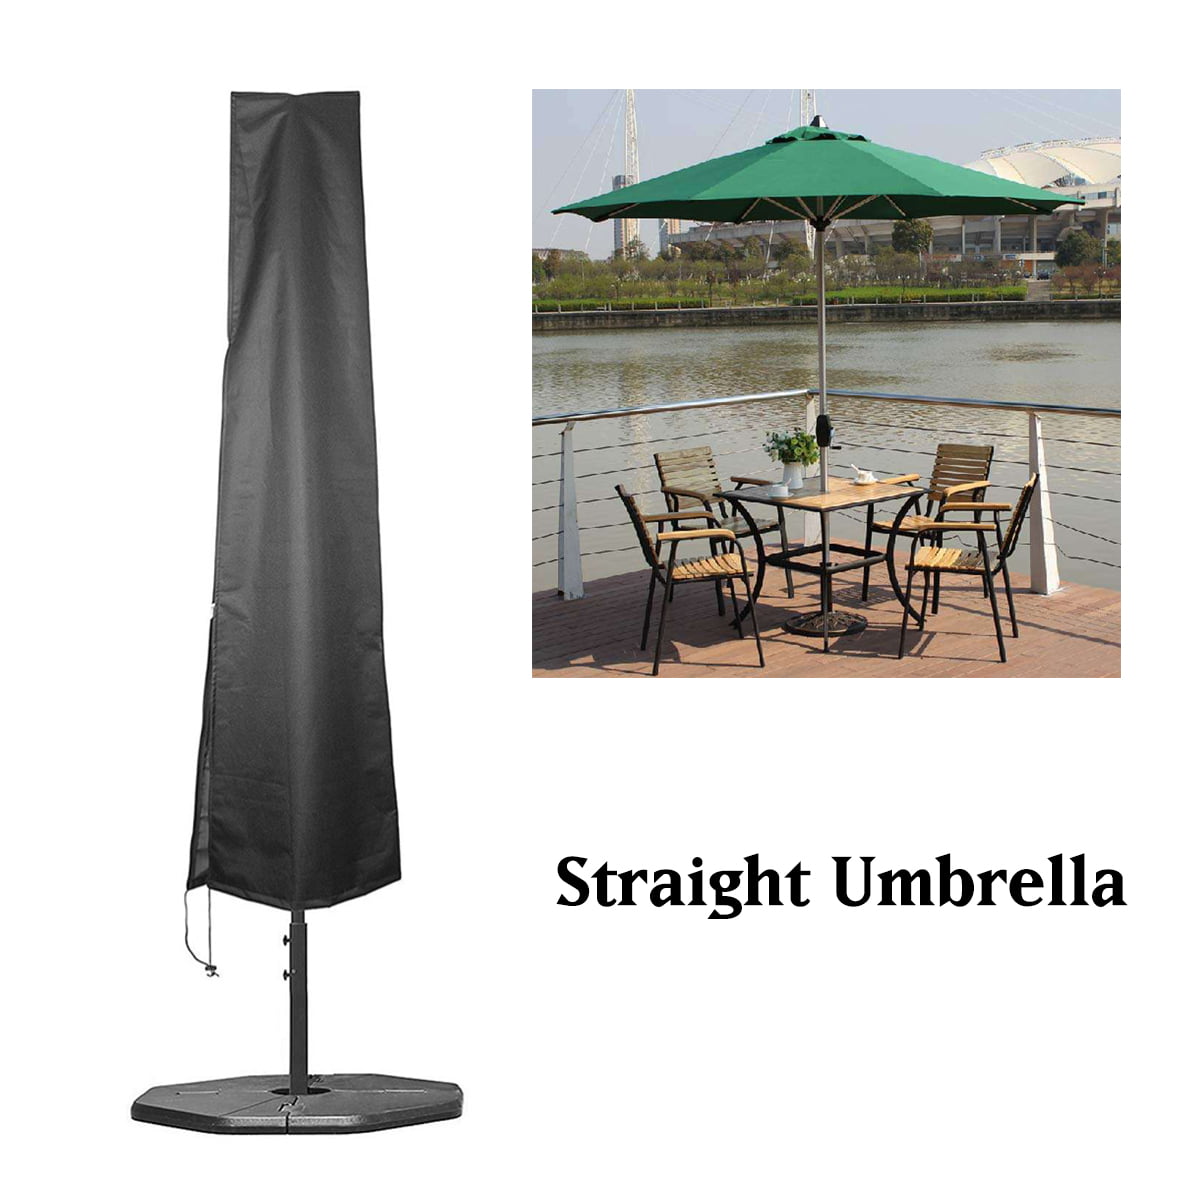 Parasol Outdoor Patio Garden Umbrella Cover Shield Sun Shade Protect Waterproof 